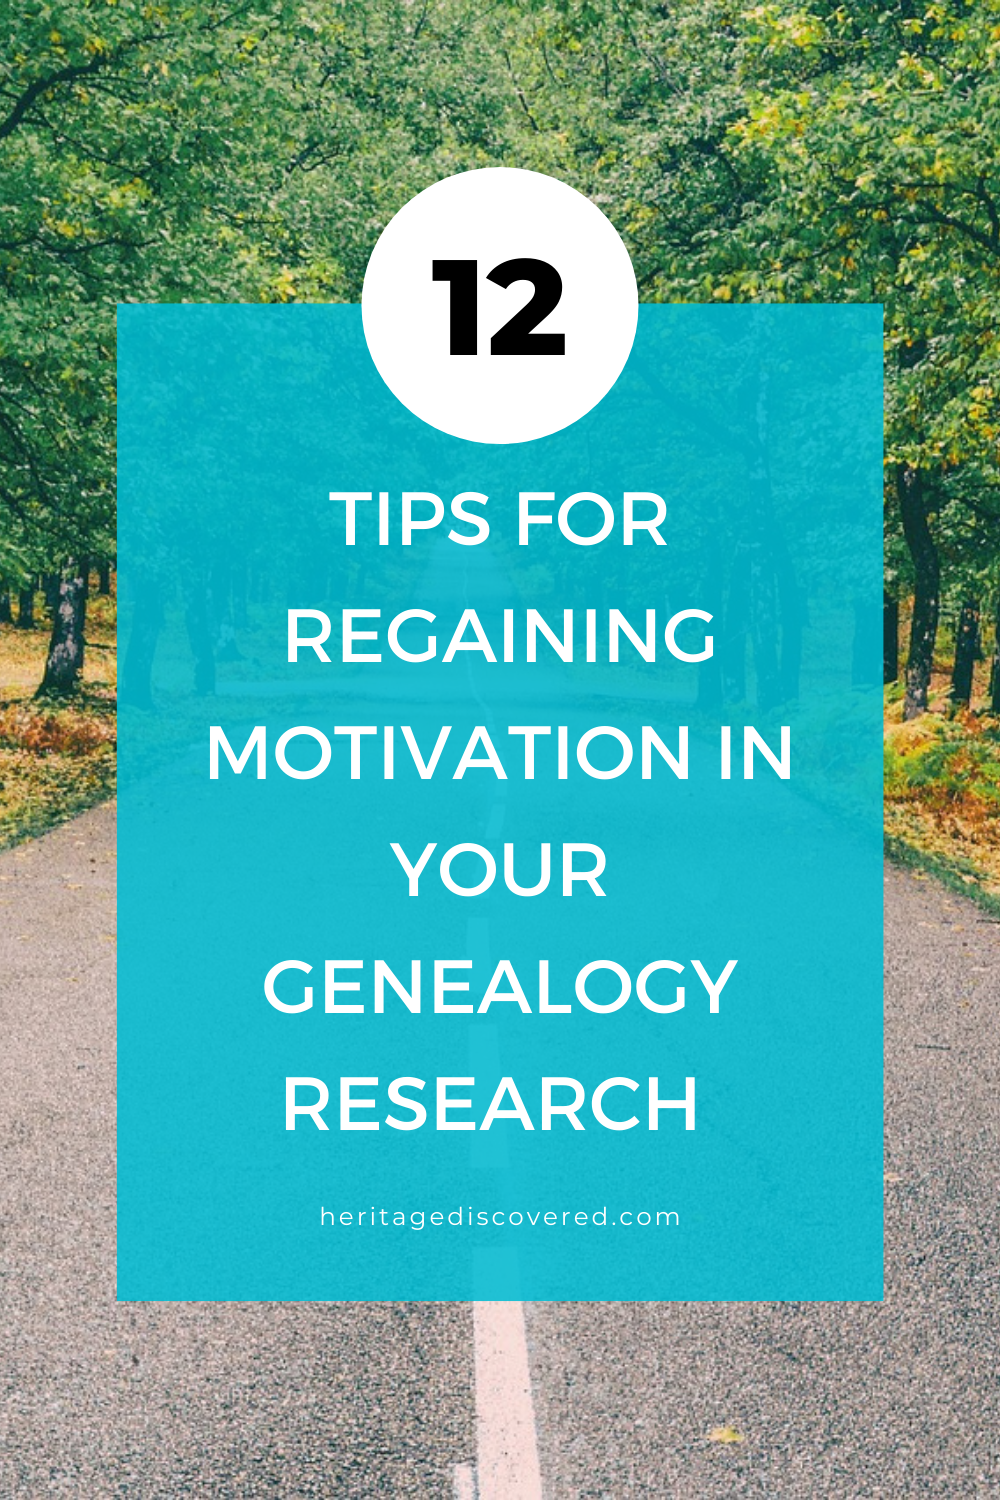 12-tips-regain-motivation-genealogy-research